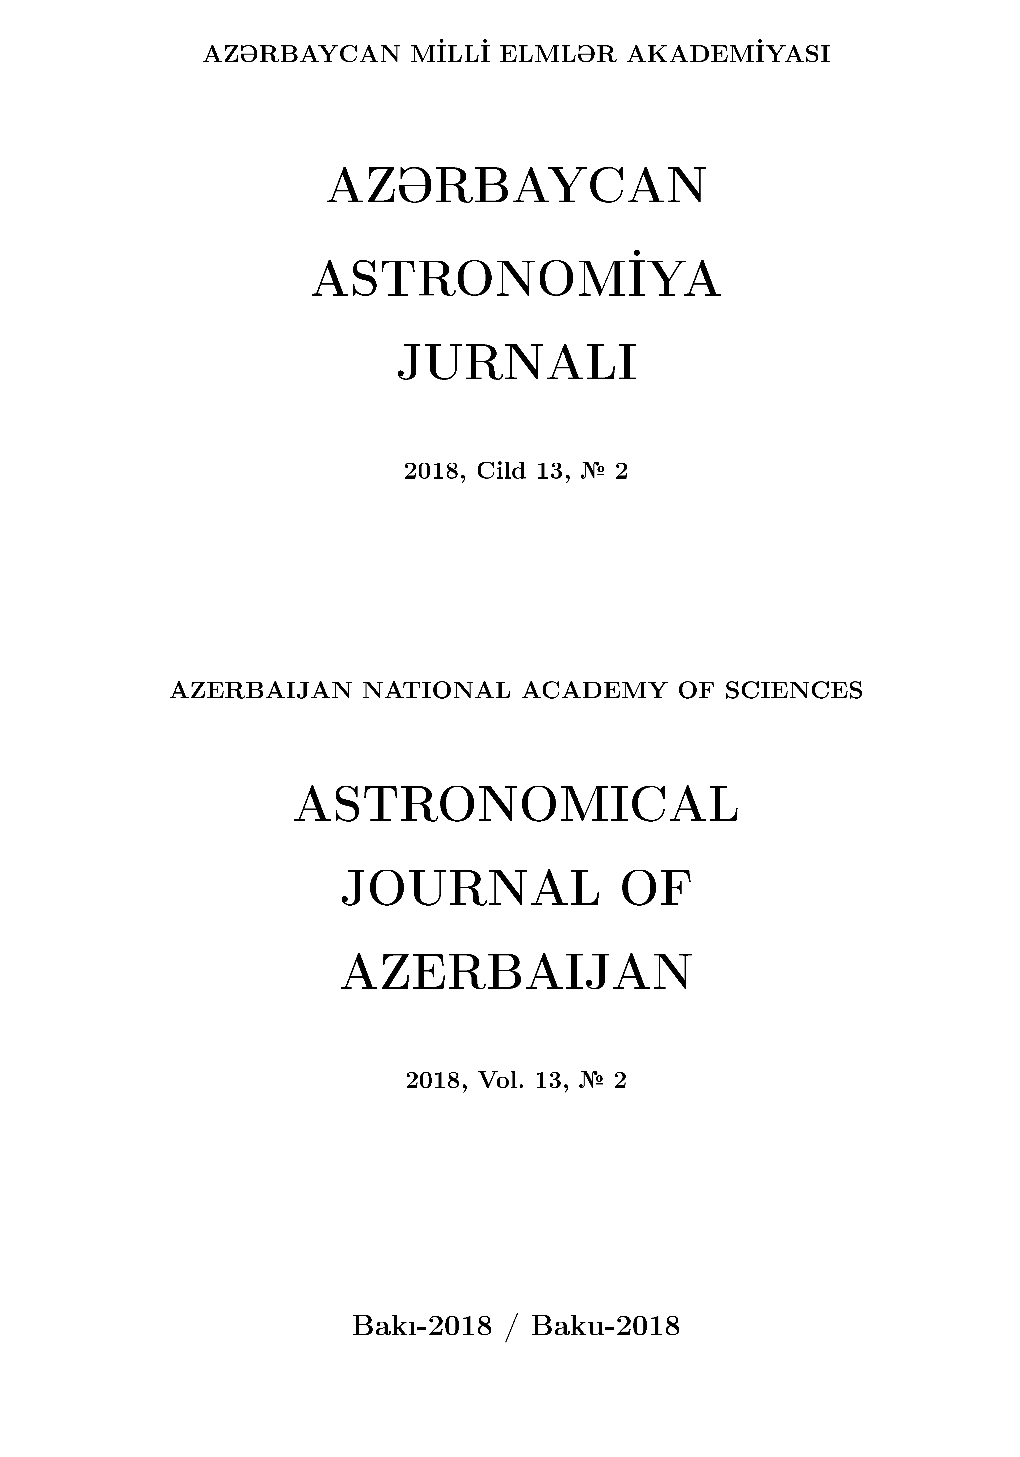 Azörbaycan Astronomùya Jurnali Astronomical